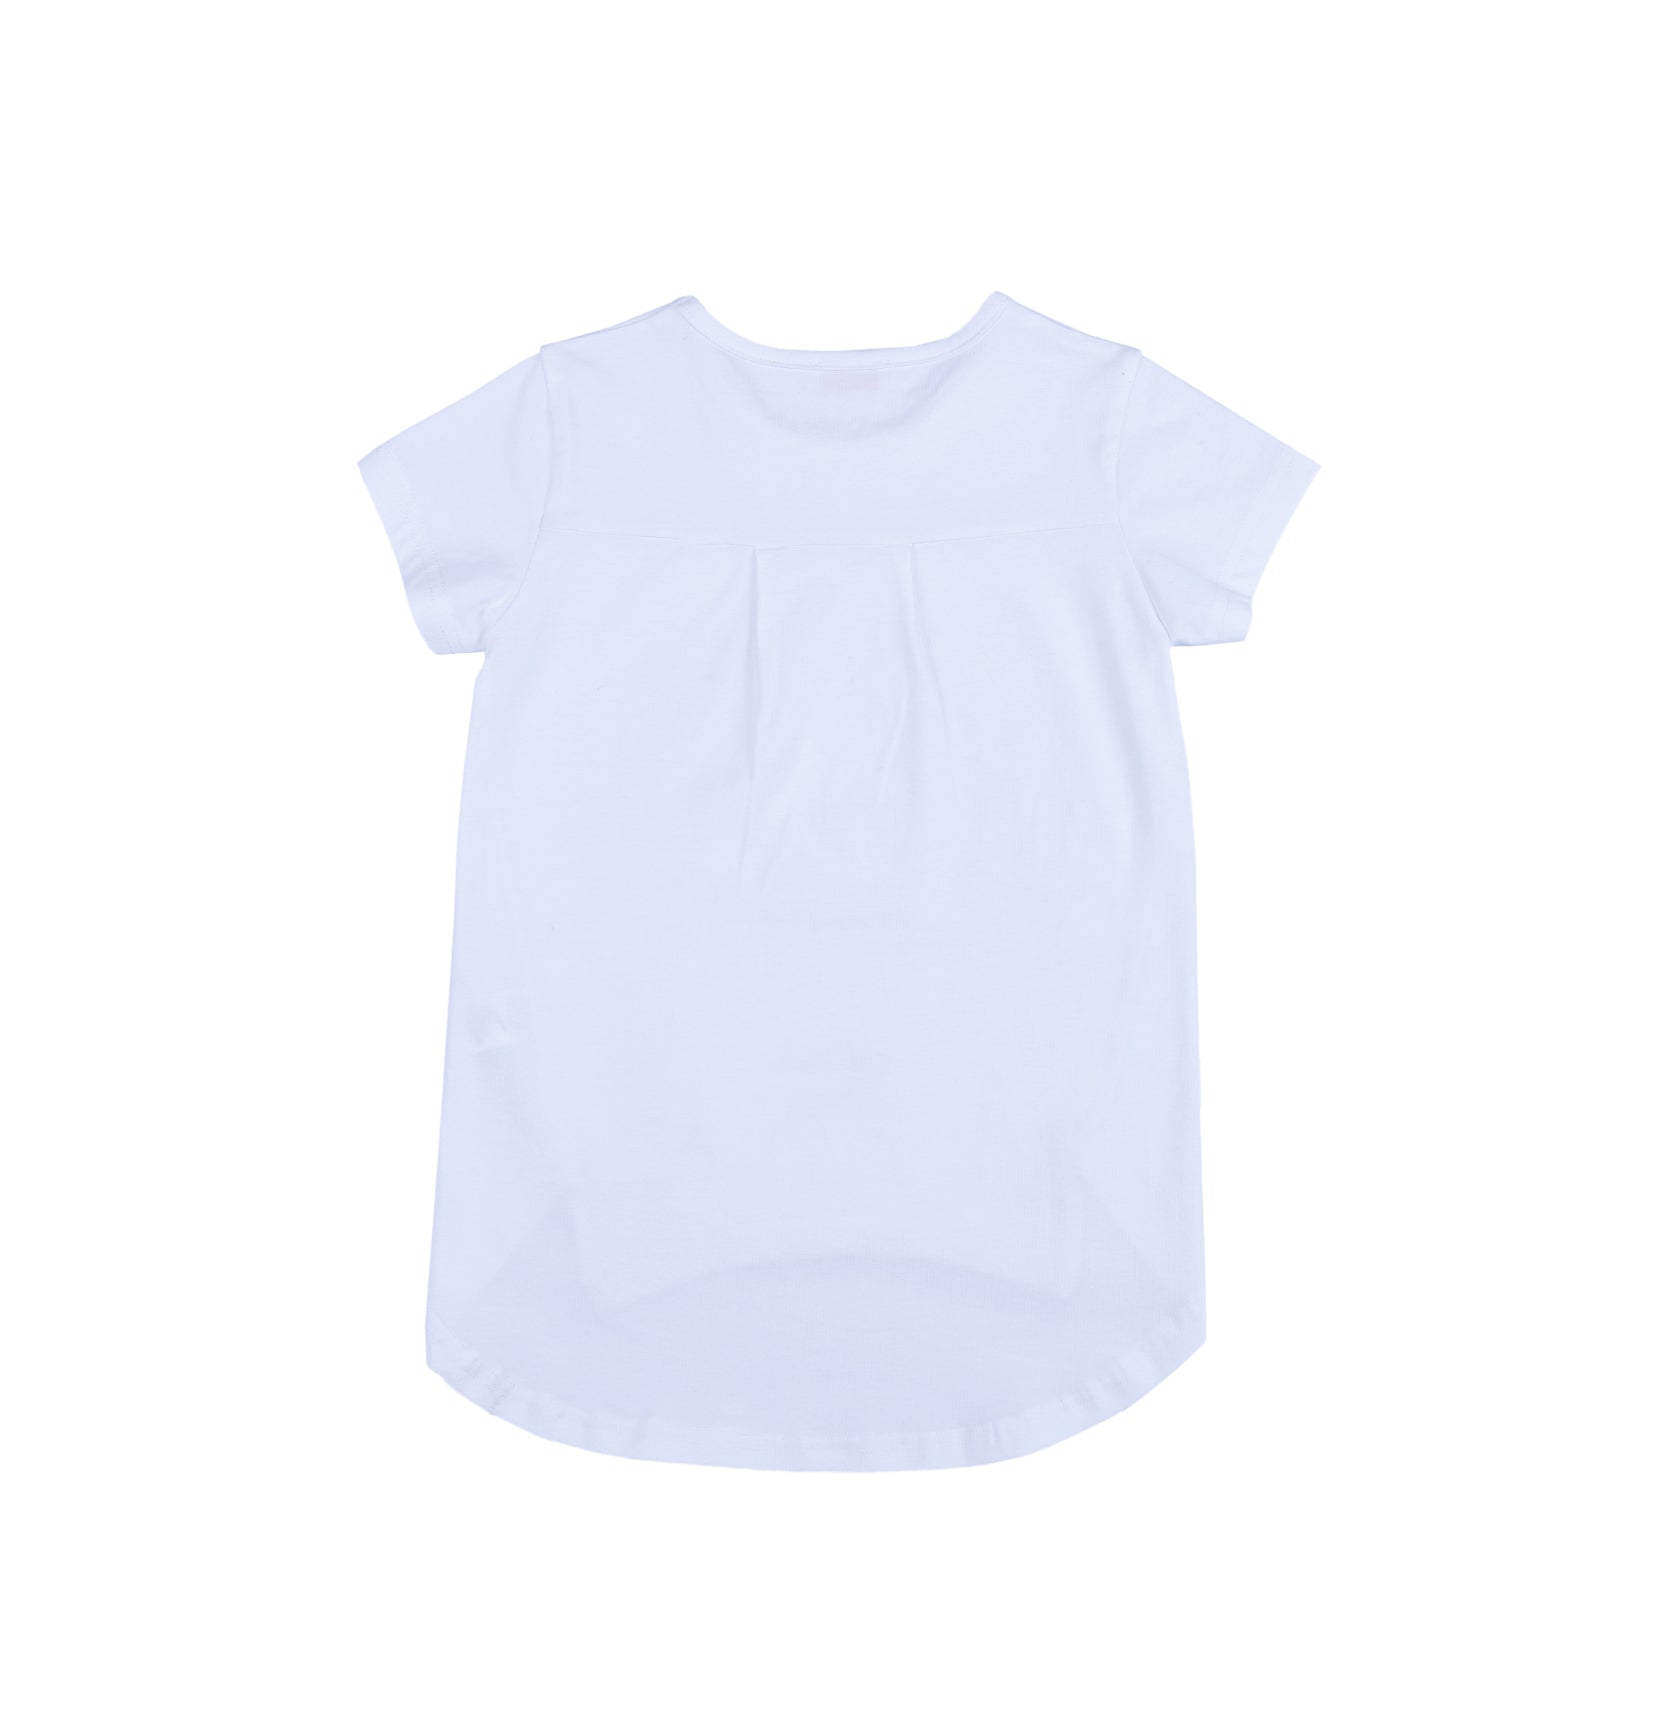 Girlish half sleeve summer blouse by Pompelo